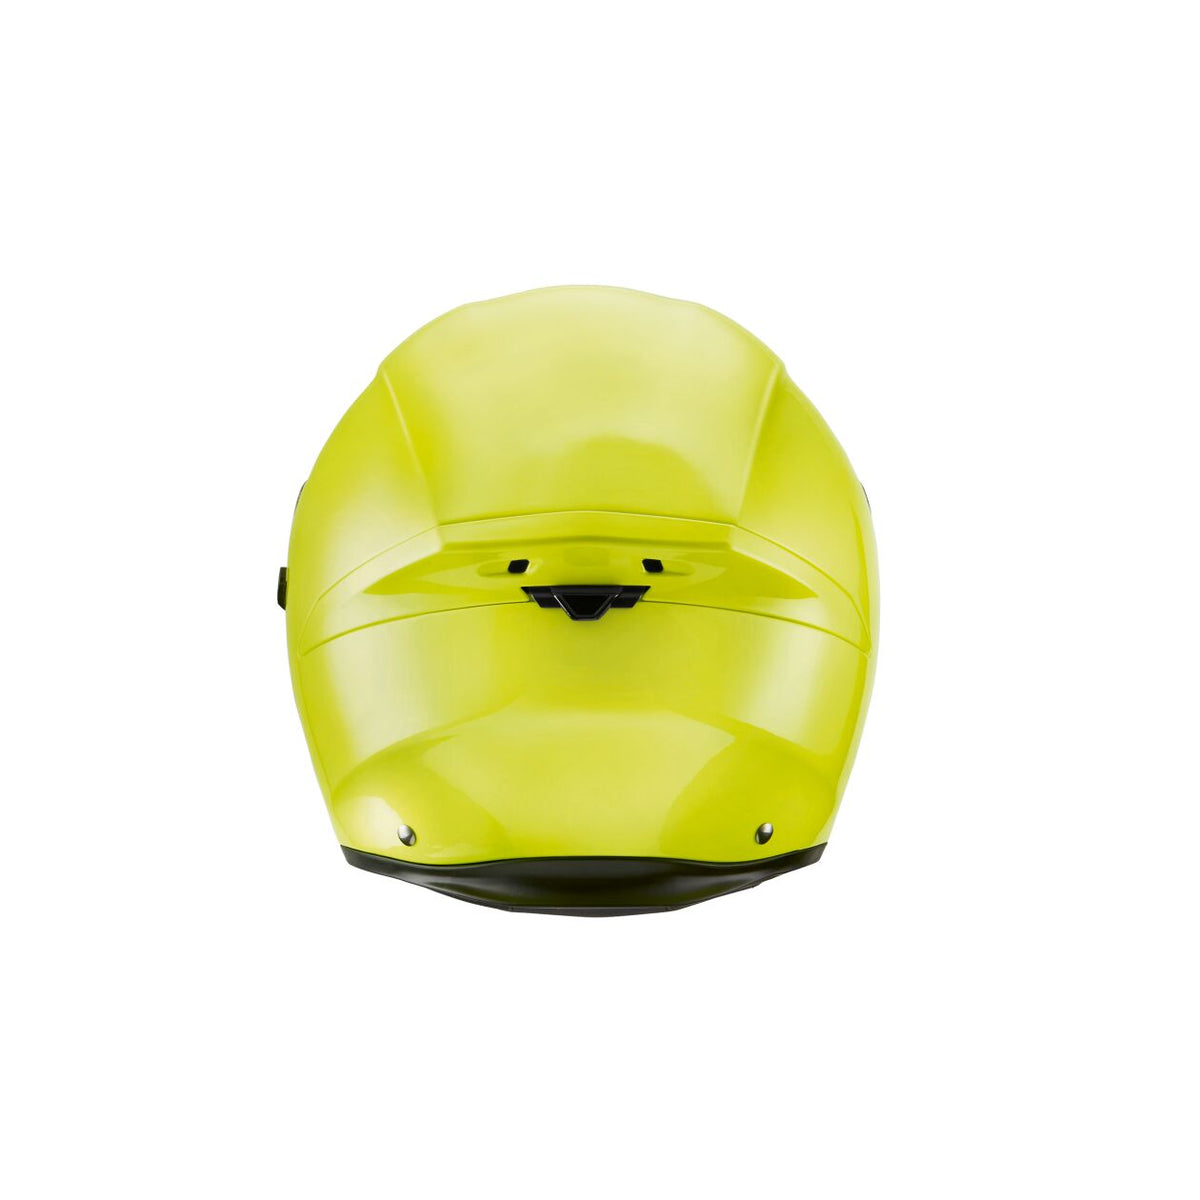 Sao Paulo ECE Helmet